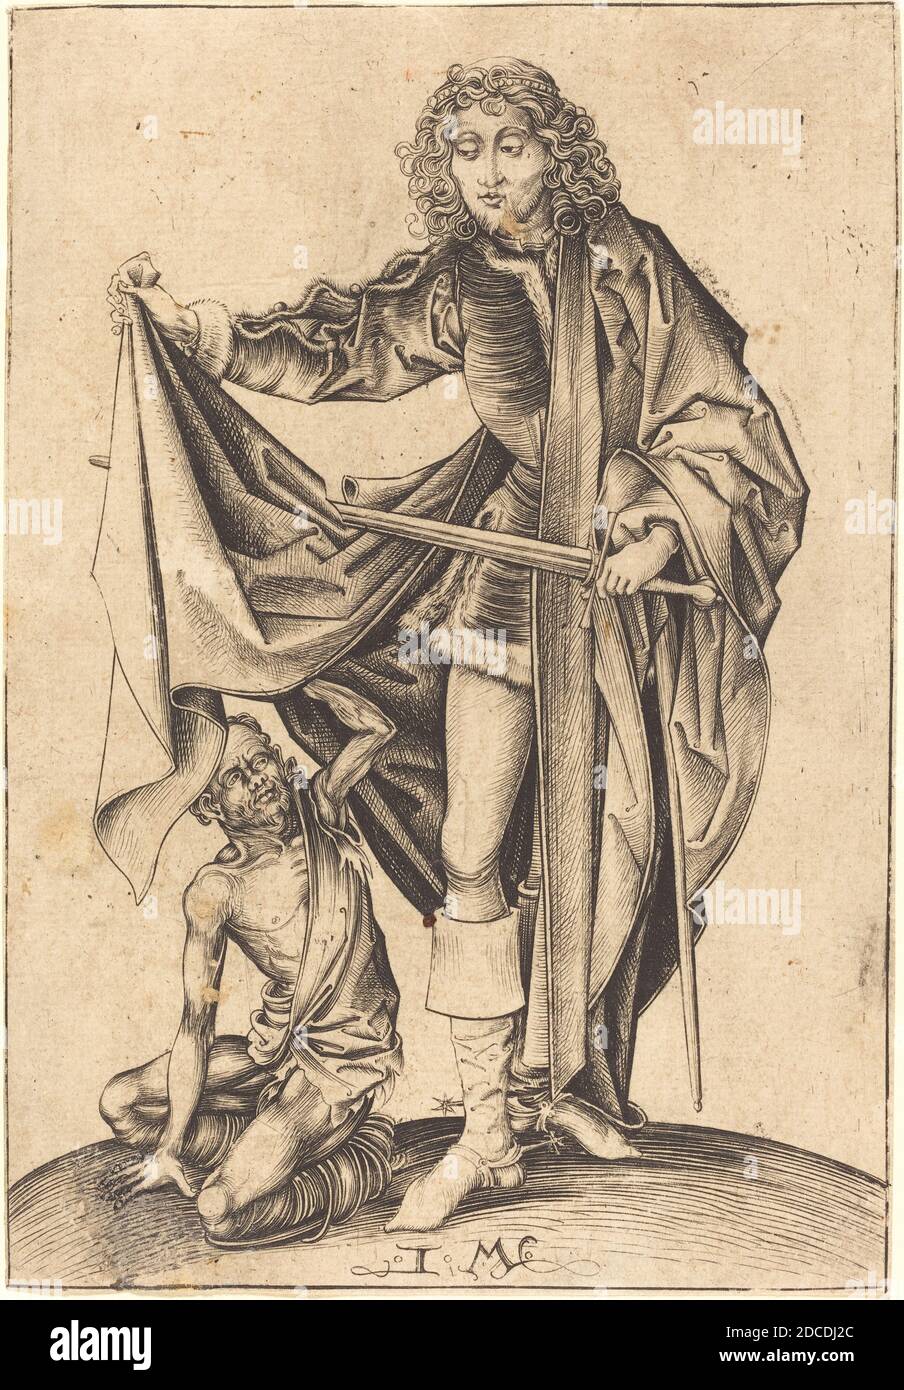 Israhel van Meckenem, (artist), German, c. 1445 - 1503, Martin Schongauer, (artist after), German, c. 1450 - 1491, Saint Martin, c. 1480/1490, engraving Stock Photo